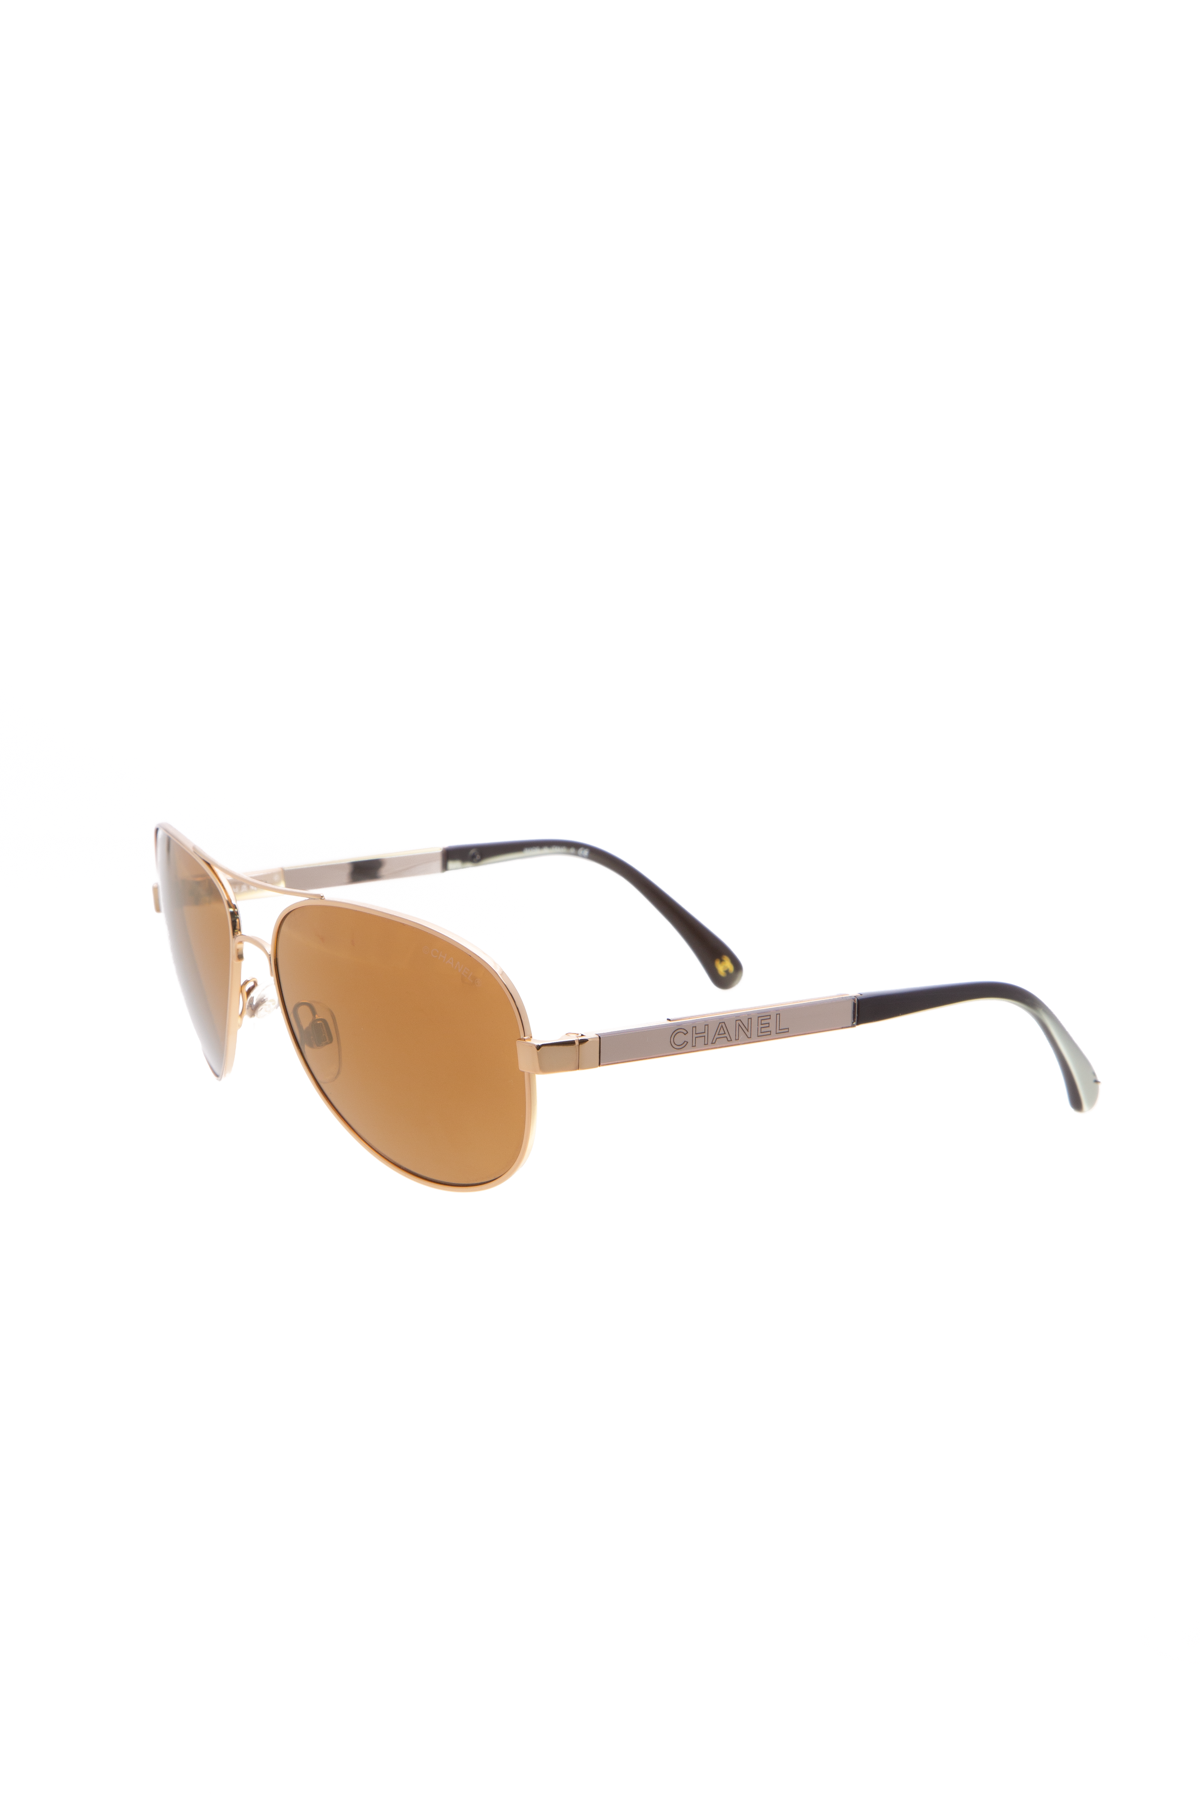 Chanel Aviator Sunglasses - Couture USA